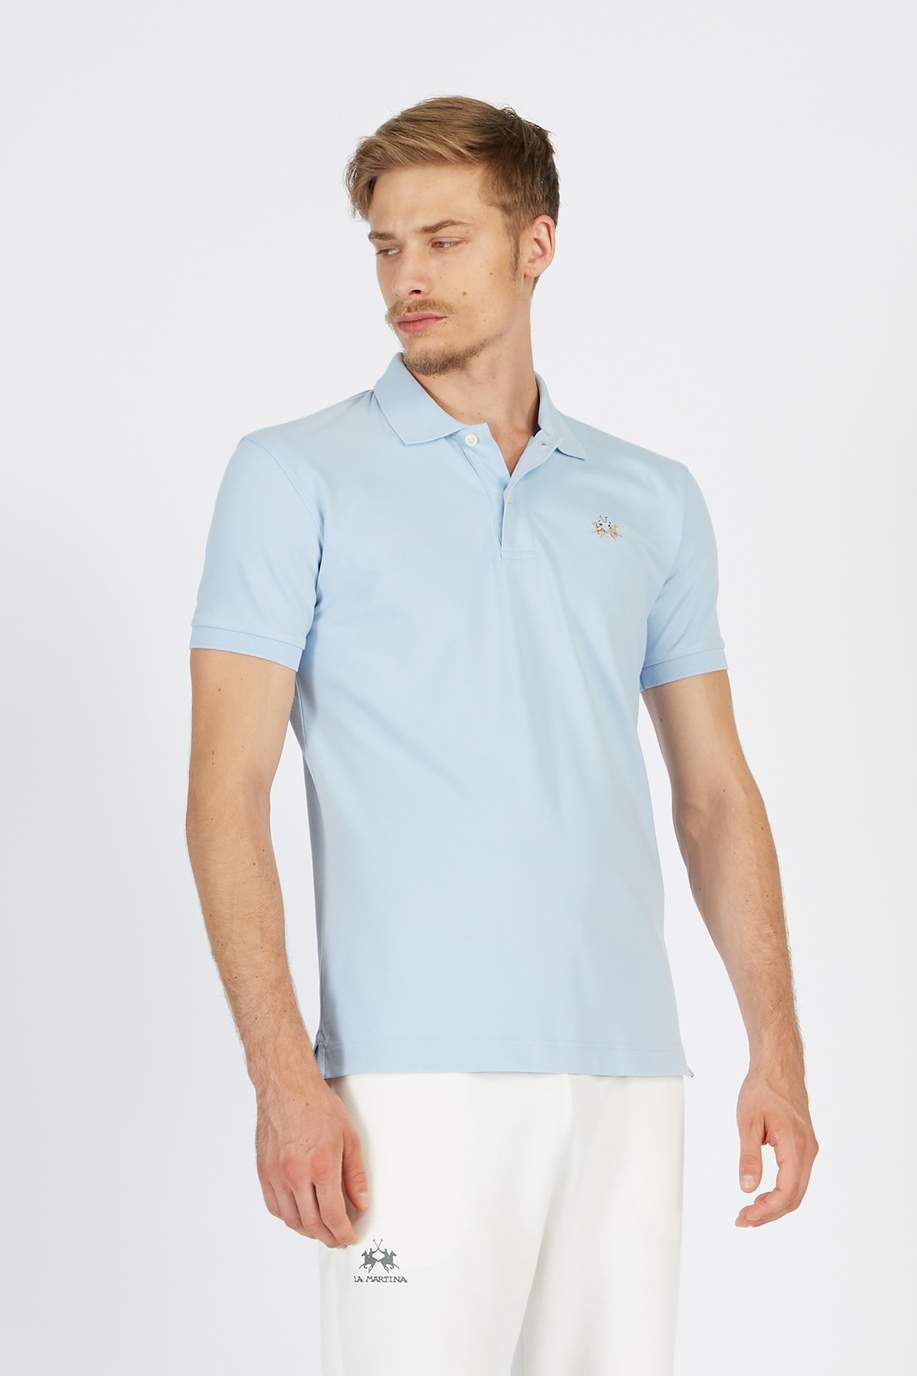 Herren-Poloshirt Slim Fit - Eduardo - Slim fit | La Martina - Official Online Shop